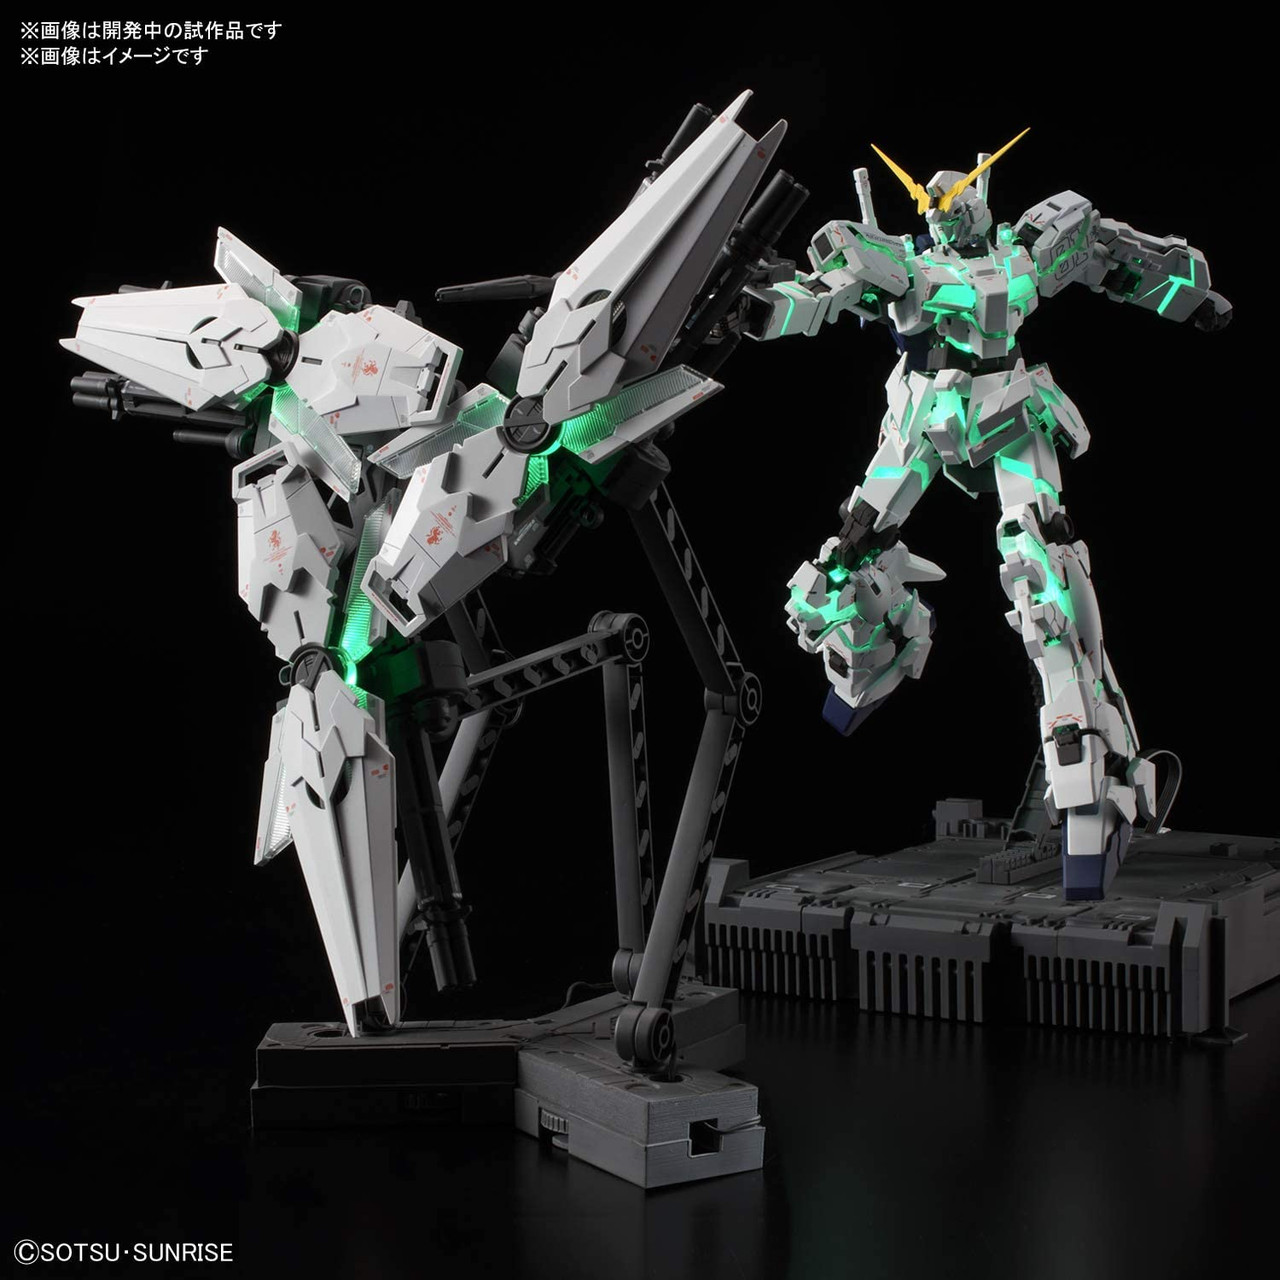 BANDAI SPIRITS MGEX Mobile Suit Gundam UC Unicorn Gundam Ver.Ka 1/100 Scale Color-coded Plastic Model 